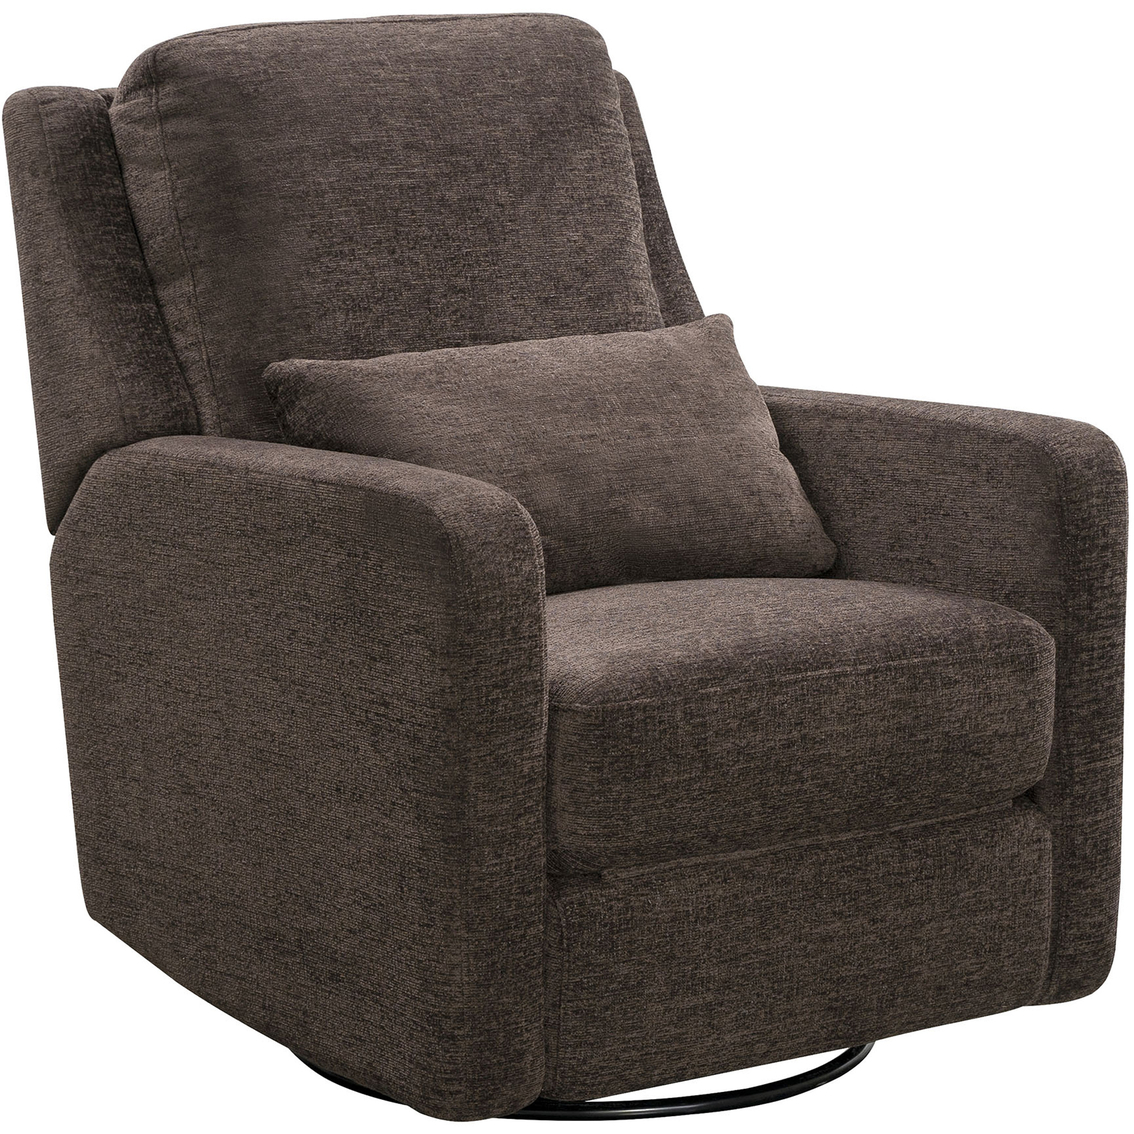 Abbyson Sarah Swivel Glider Recliner | Chairs & Recliners | Furniture